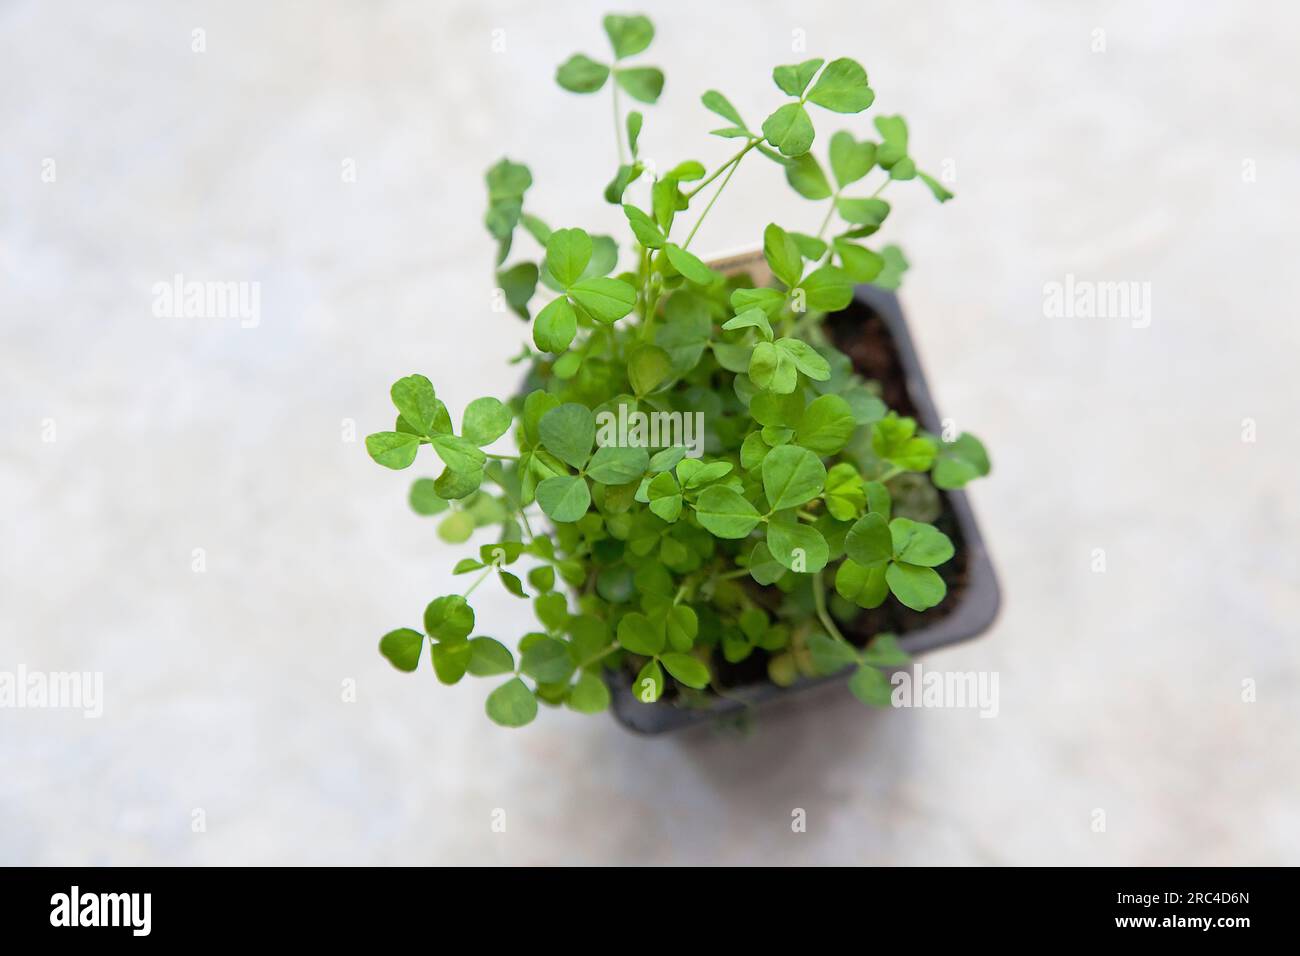 Plants, Flora, Trifolium dubium, Shamrock growing in small plastic container. Stock Photo